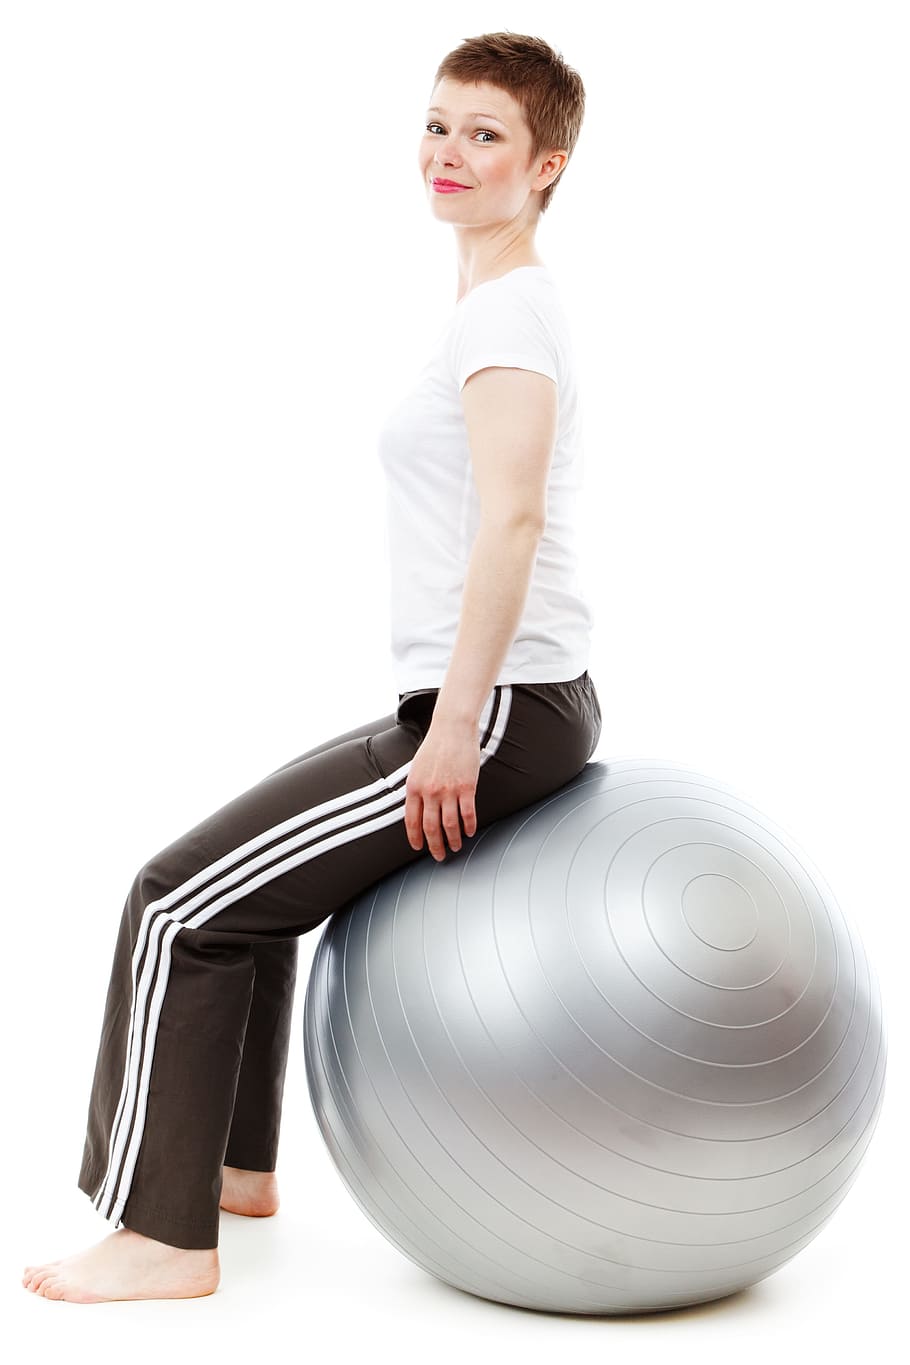 woman, white, shirt, black, sweat pants, sitting, gray, stability ball, grey, exercise ball